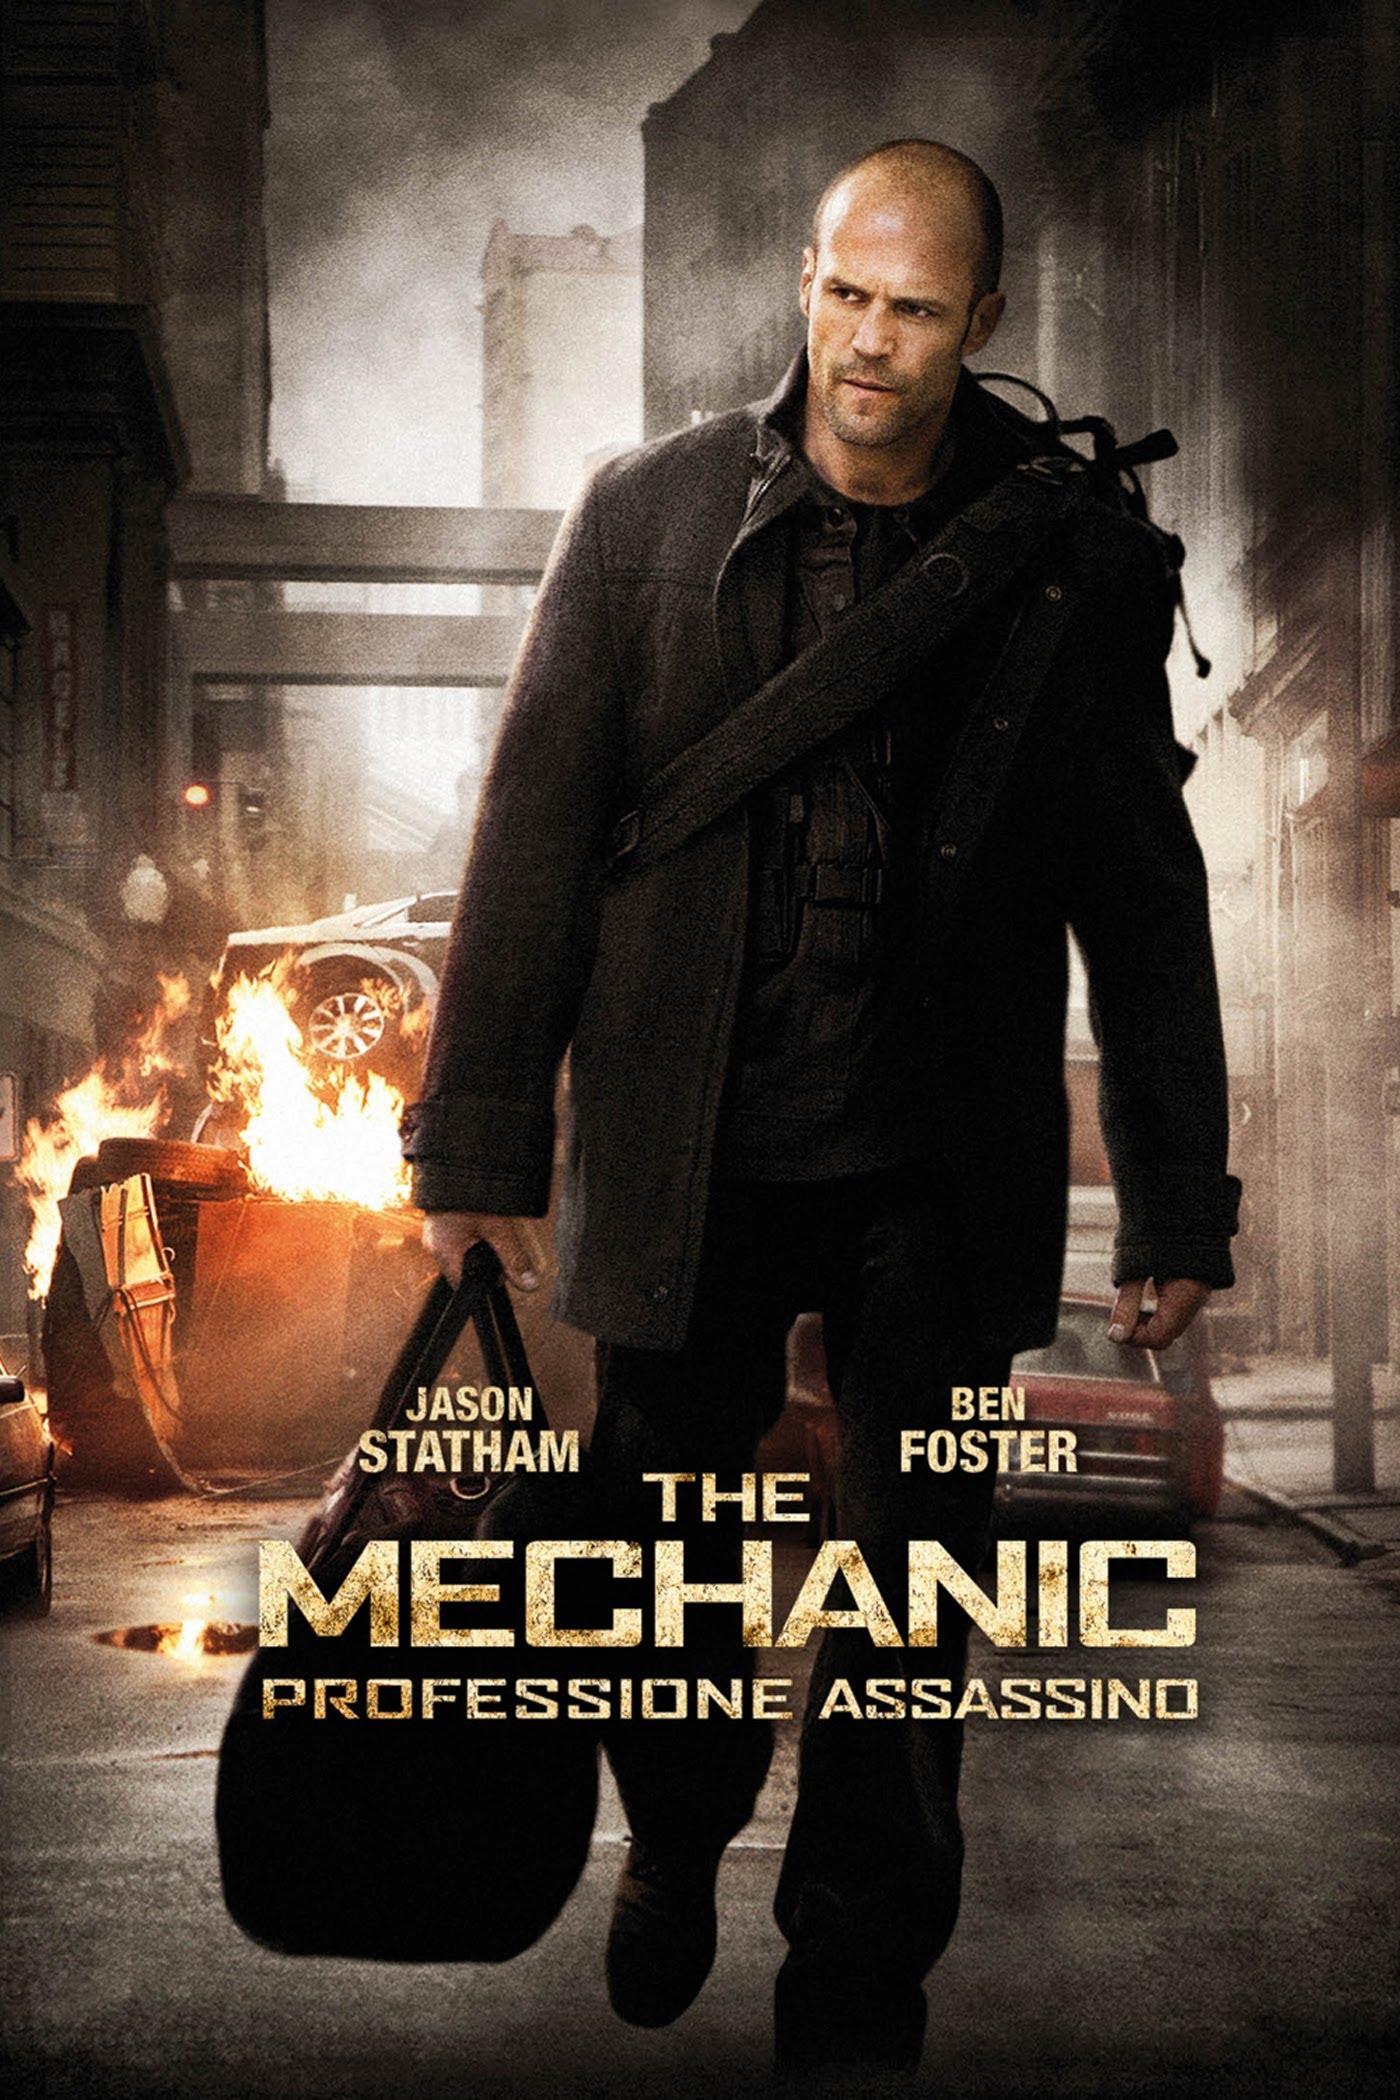 Professione assassino – The Mechanic [HD] (2011)